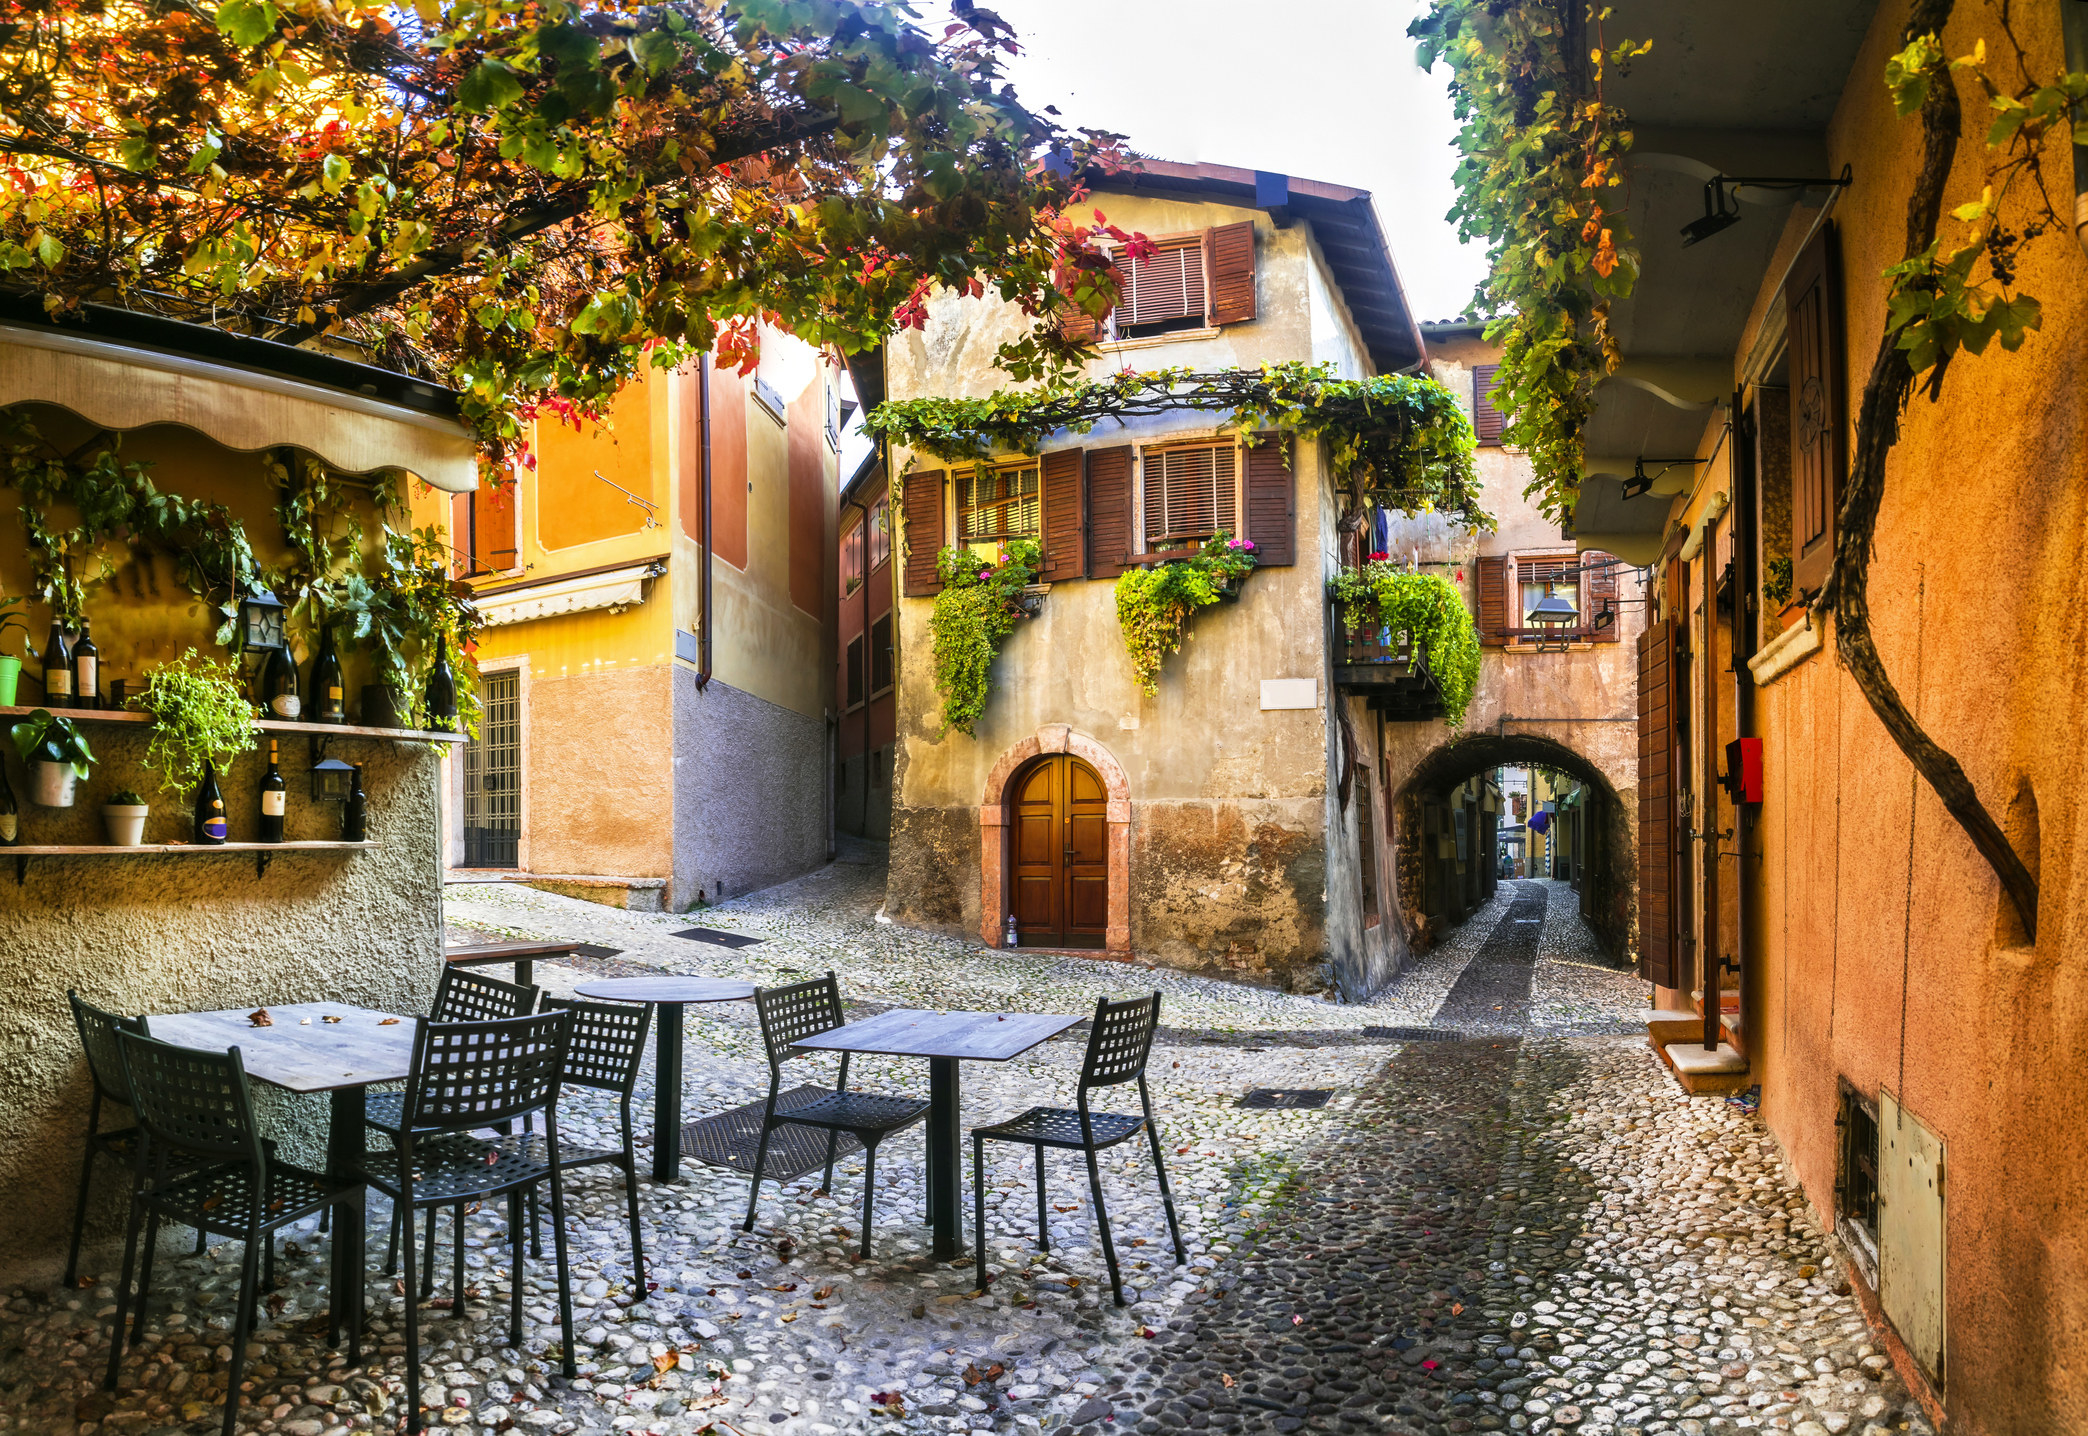 An old, charming Italian town